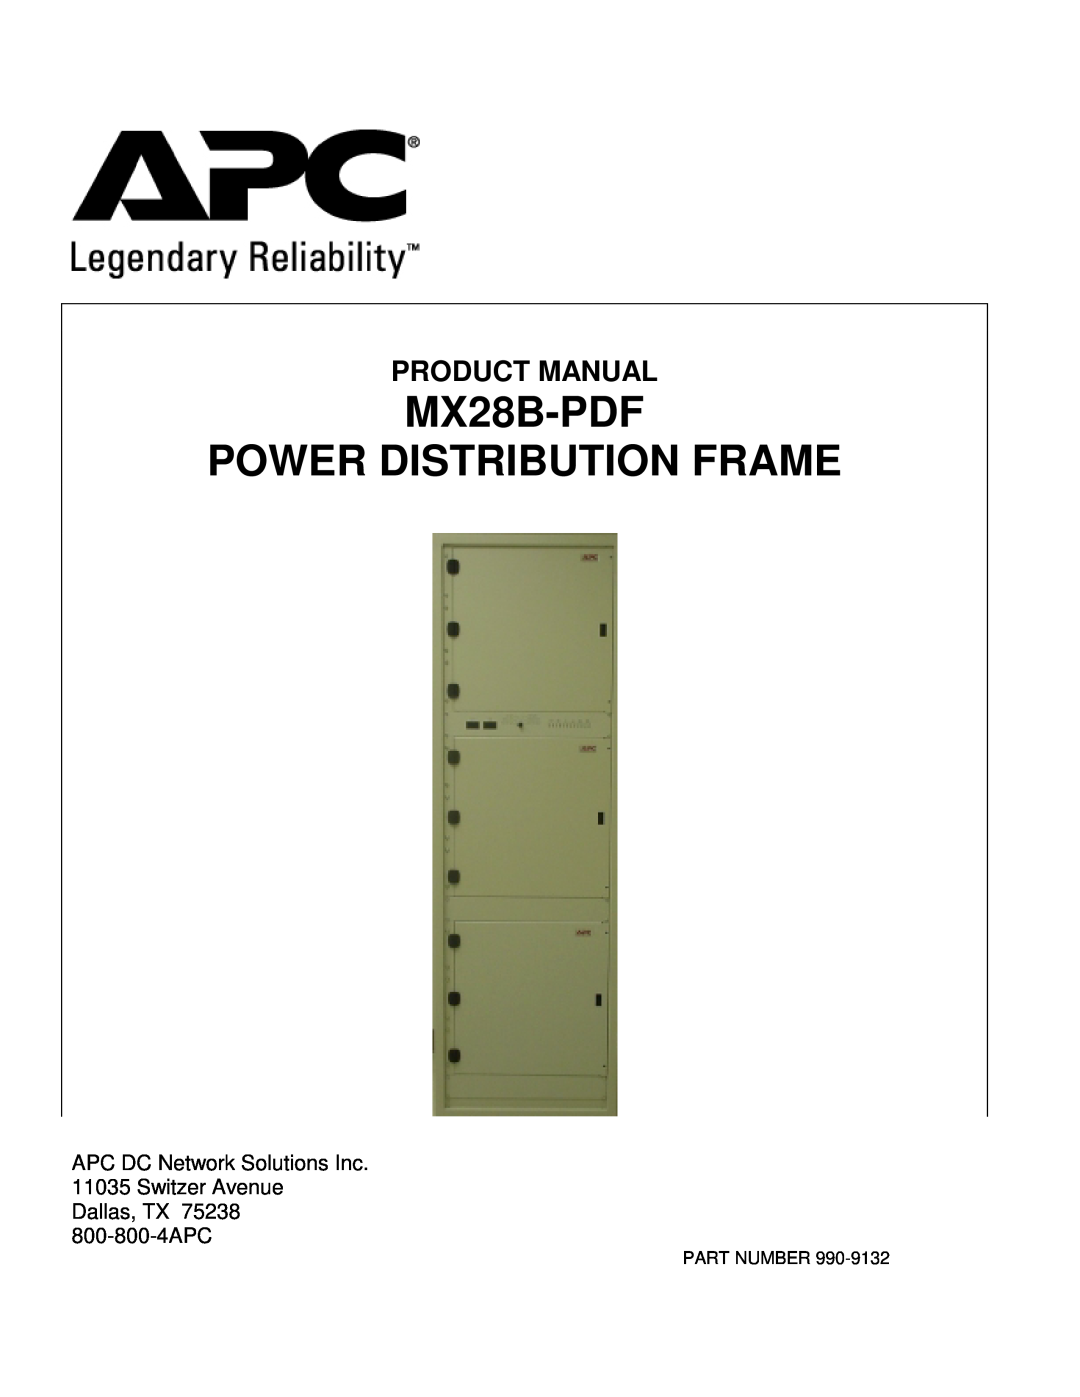 American Power Conversion manual Product Manual, MX28B-PDF POWER DISTRIBUTION FRAME 